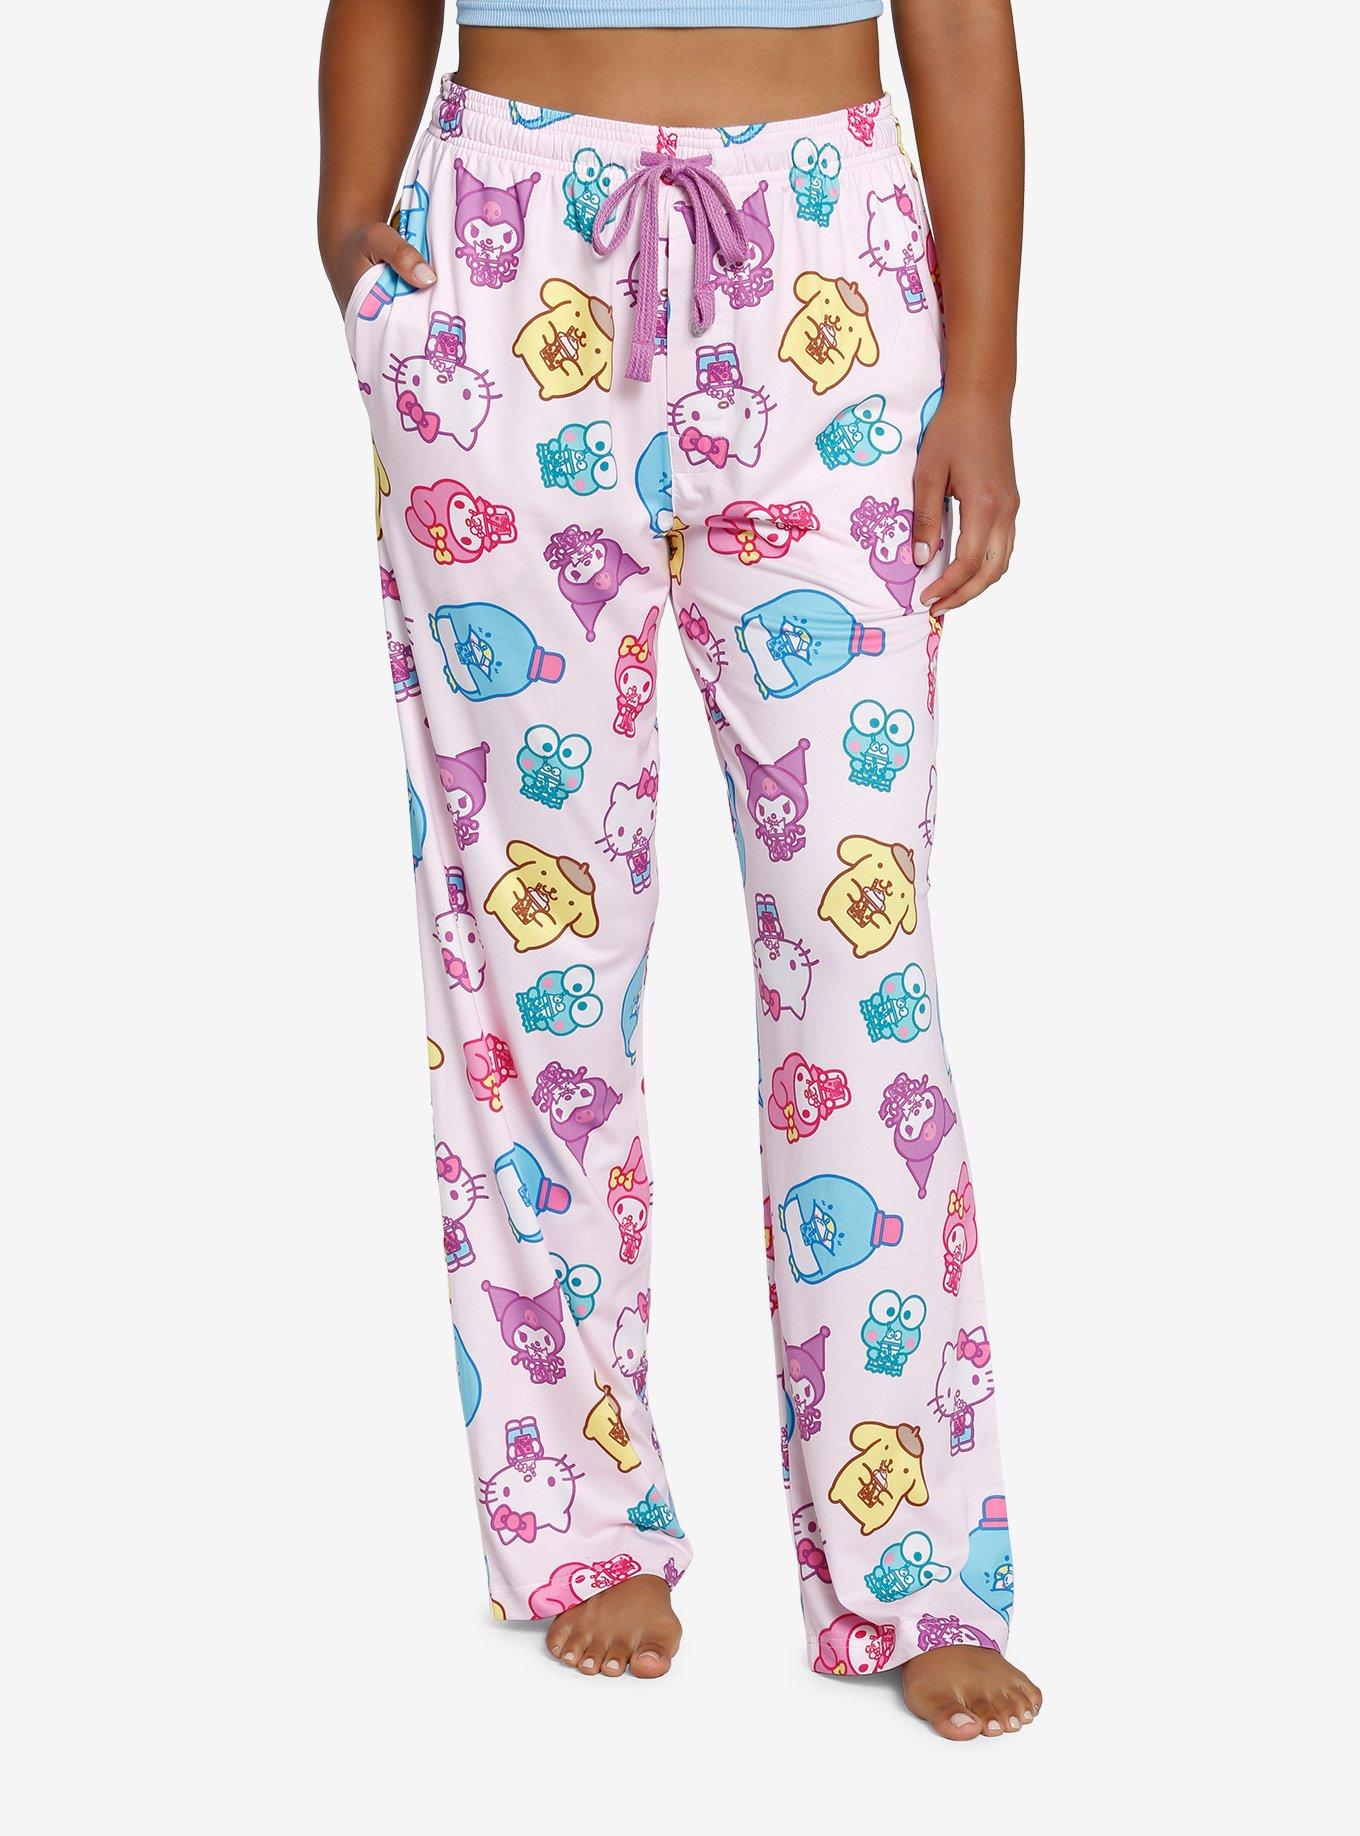 Hello Kitty Women's Print Sleep Jogger Pants, Sizes XS-3X